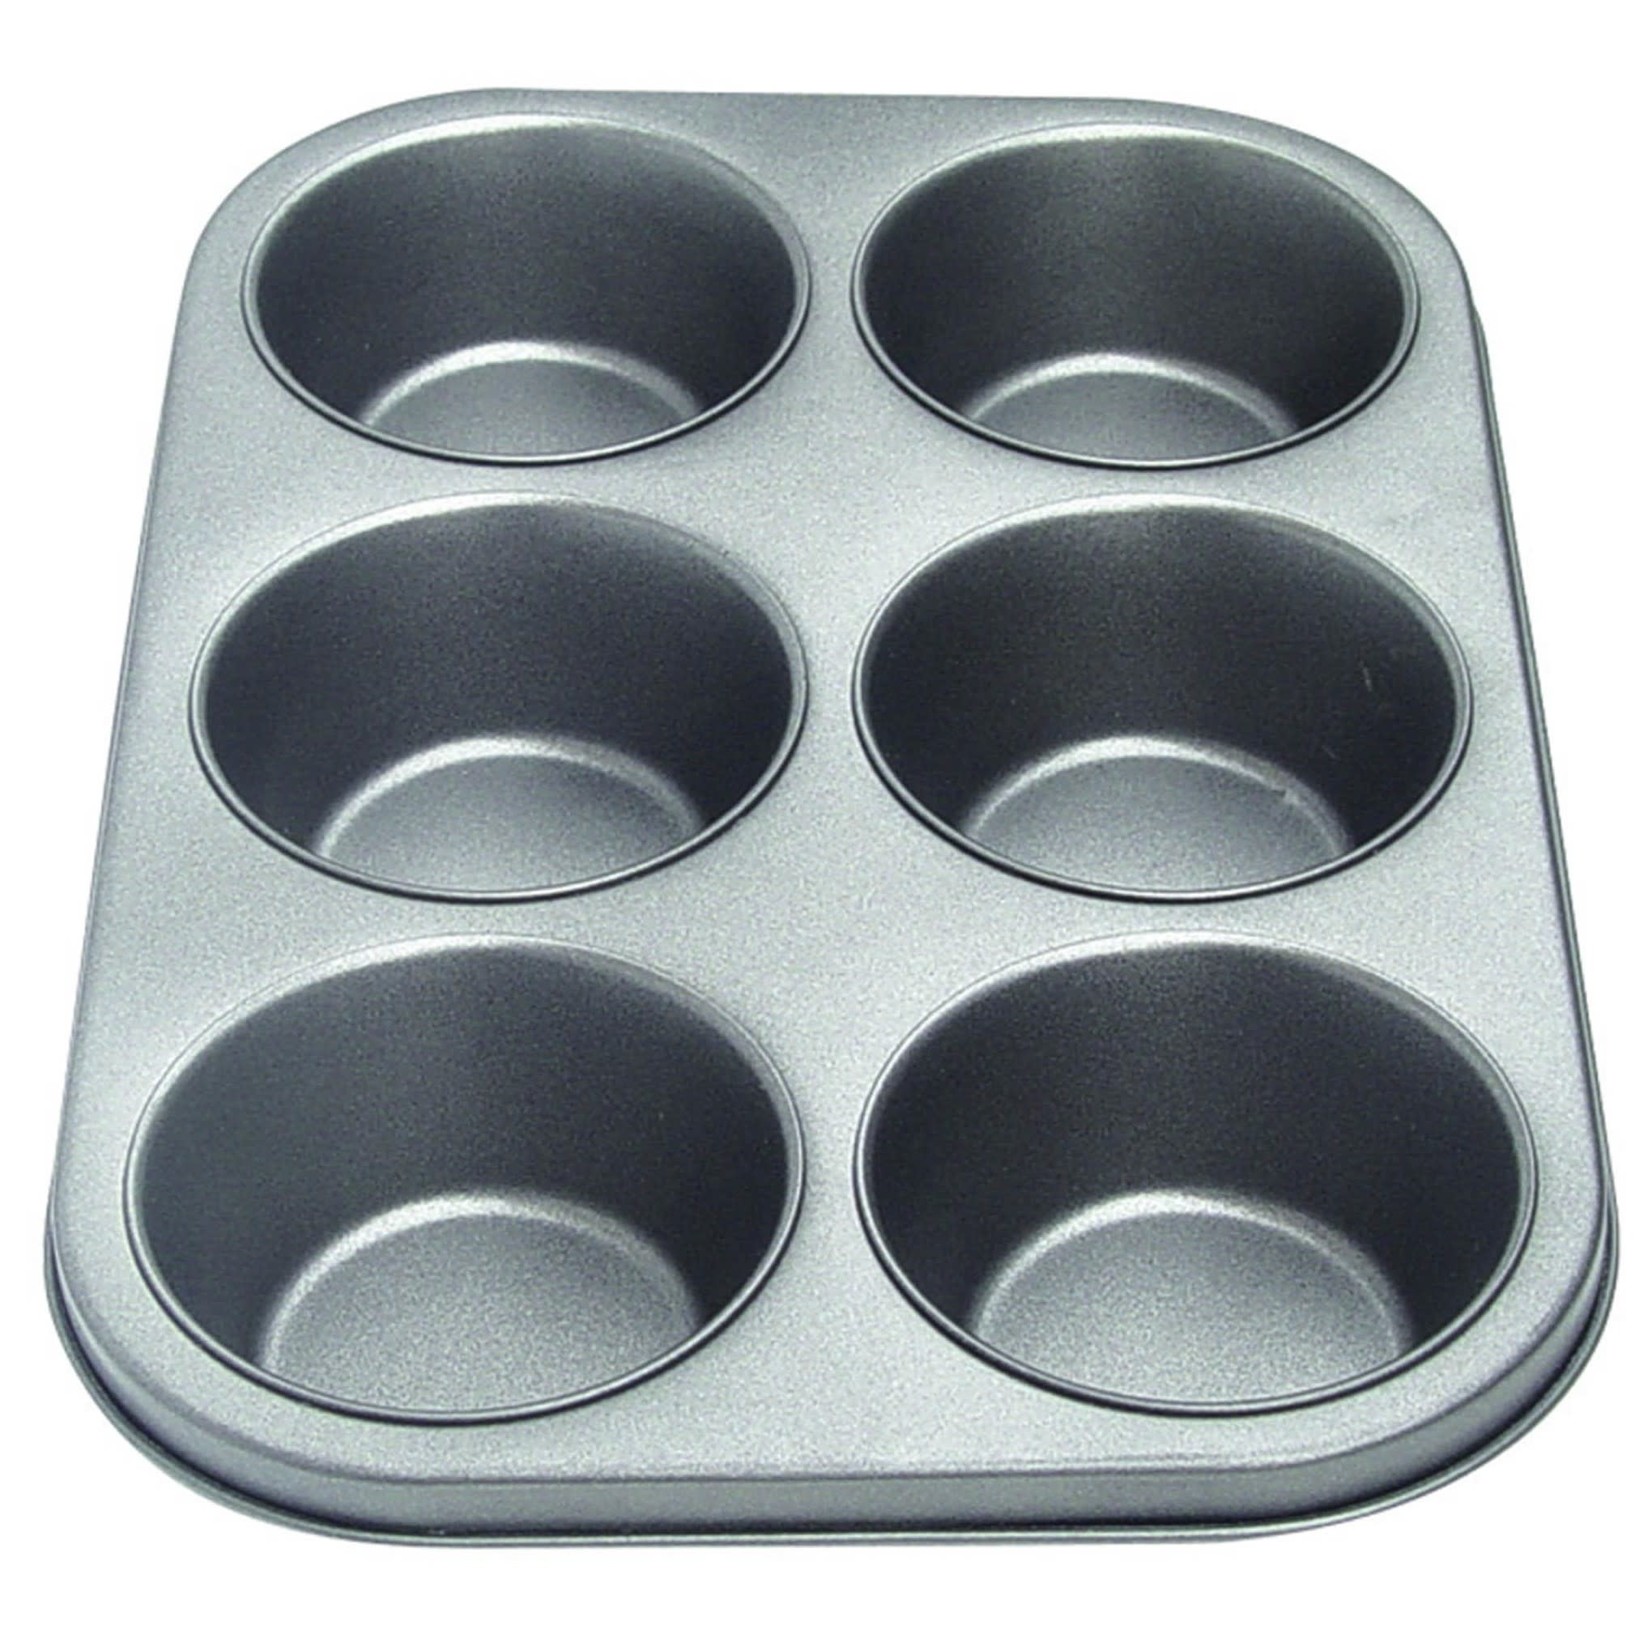 https://cdn.shoplightspeed.com/shops/627977/files/41028537/1652x1652x2/tws-non-stick-6-cup-jumbo-muffin-pan.jpg